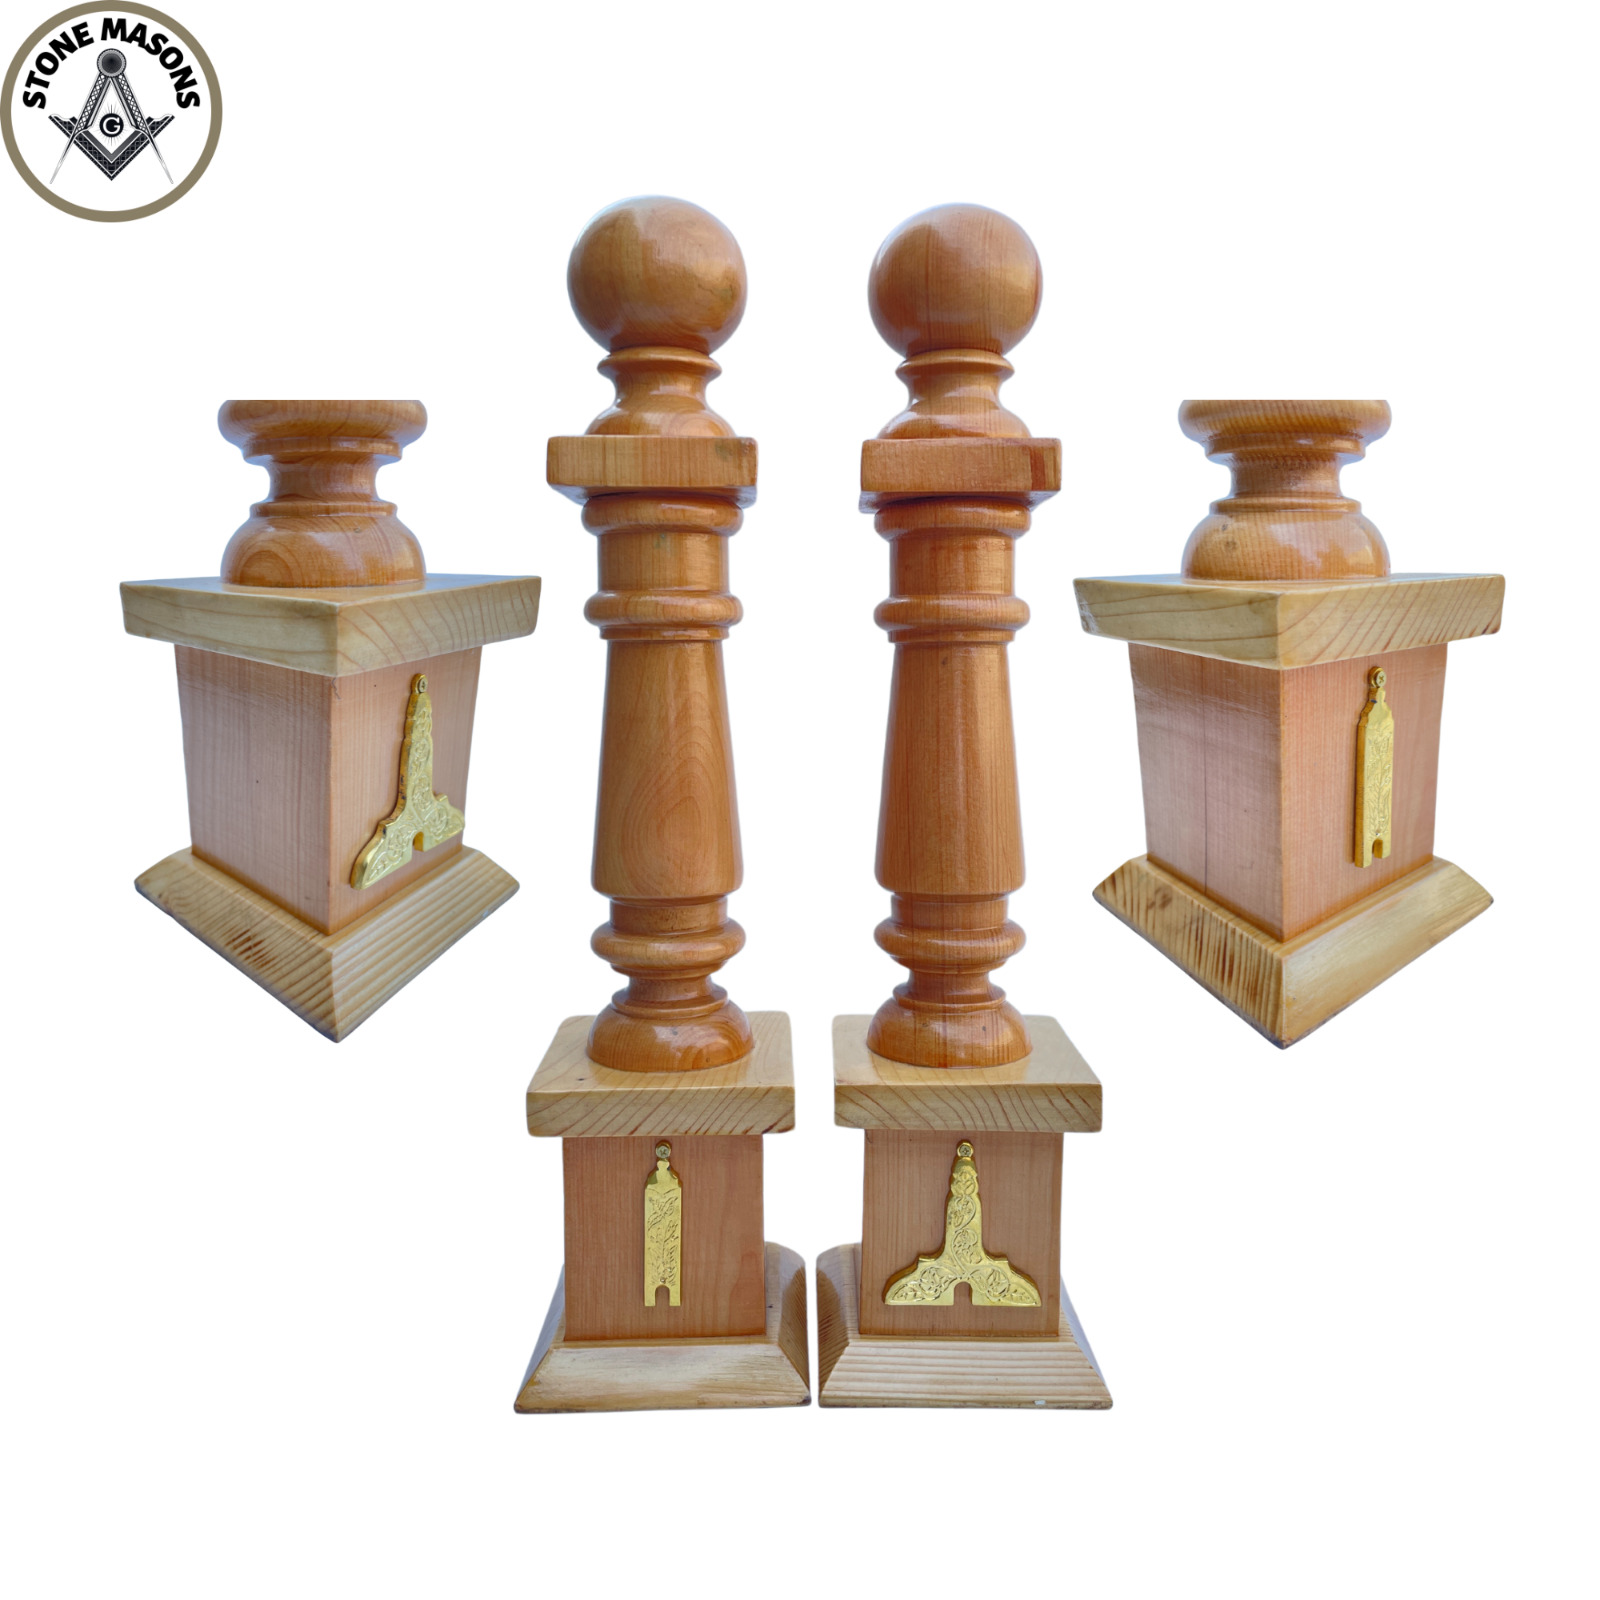 Masonic Columns, Masonic Warden Columns Premium Quality Wooden Handcrafted Work.